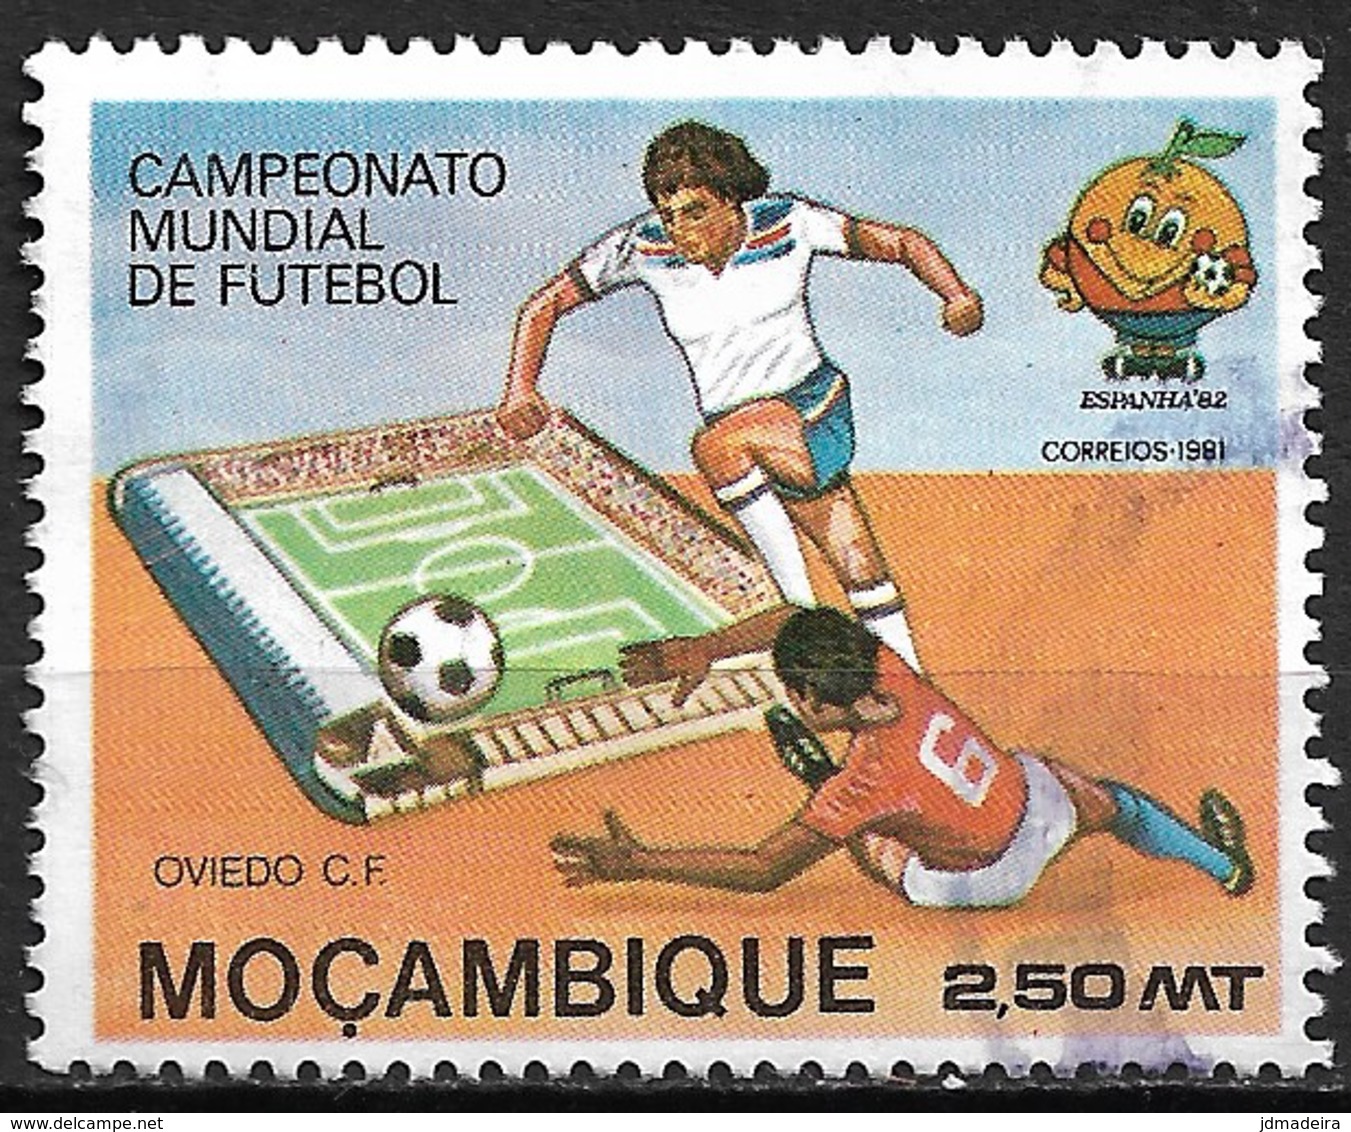 Mocambique – 1981 Football World Championship 2,50 Meticais - Mozambique